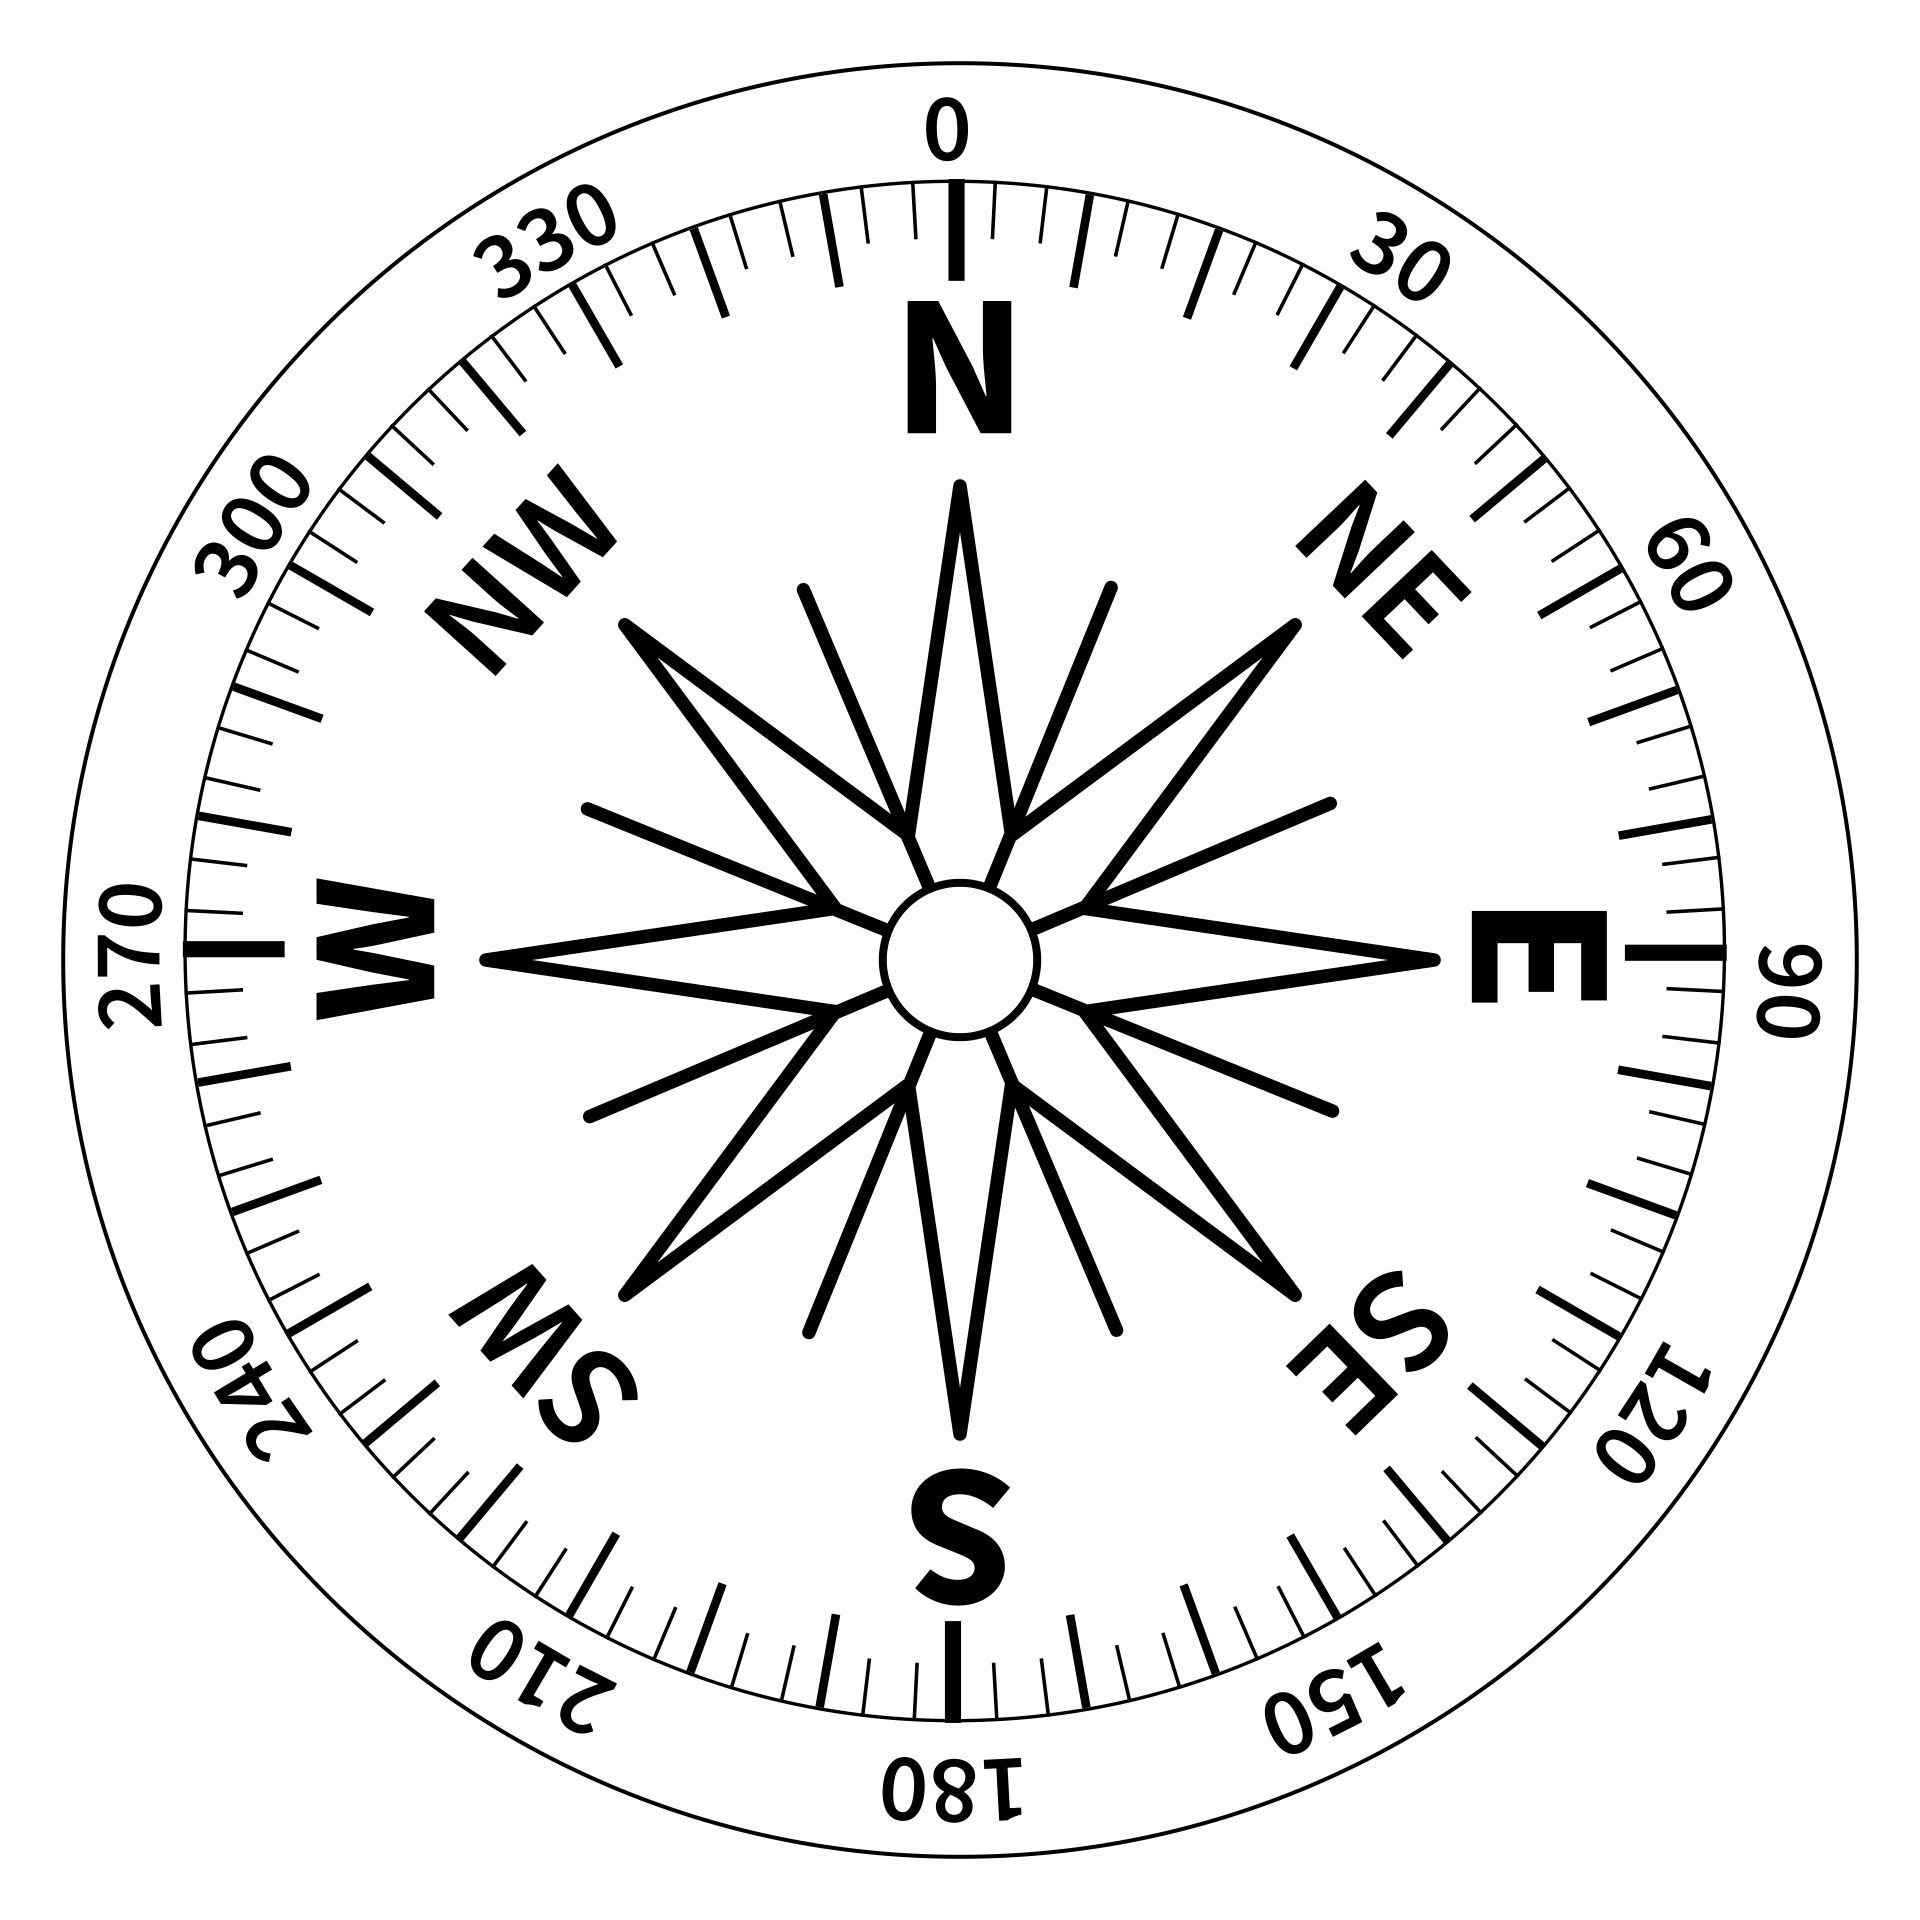 Printable Compass Degrees_63304